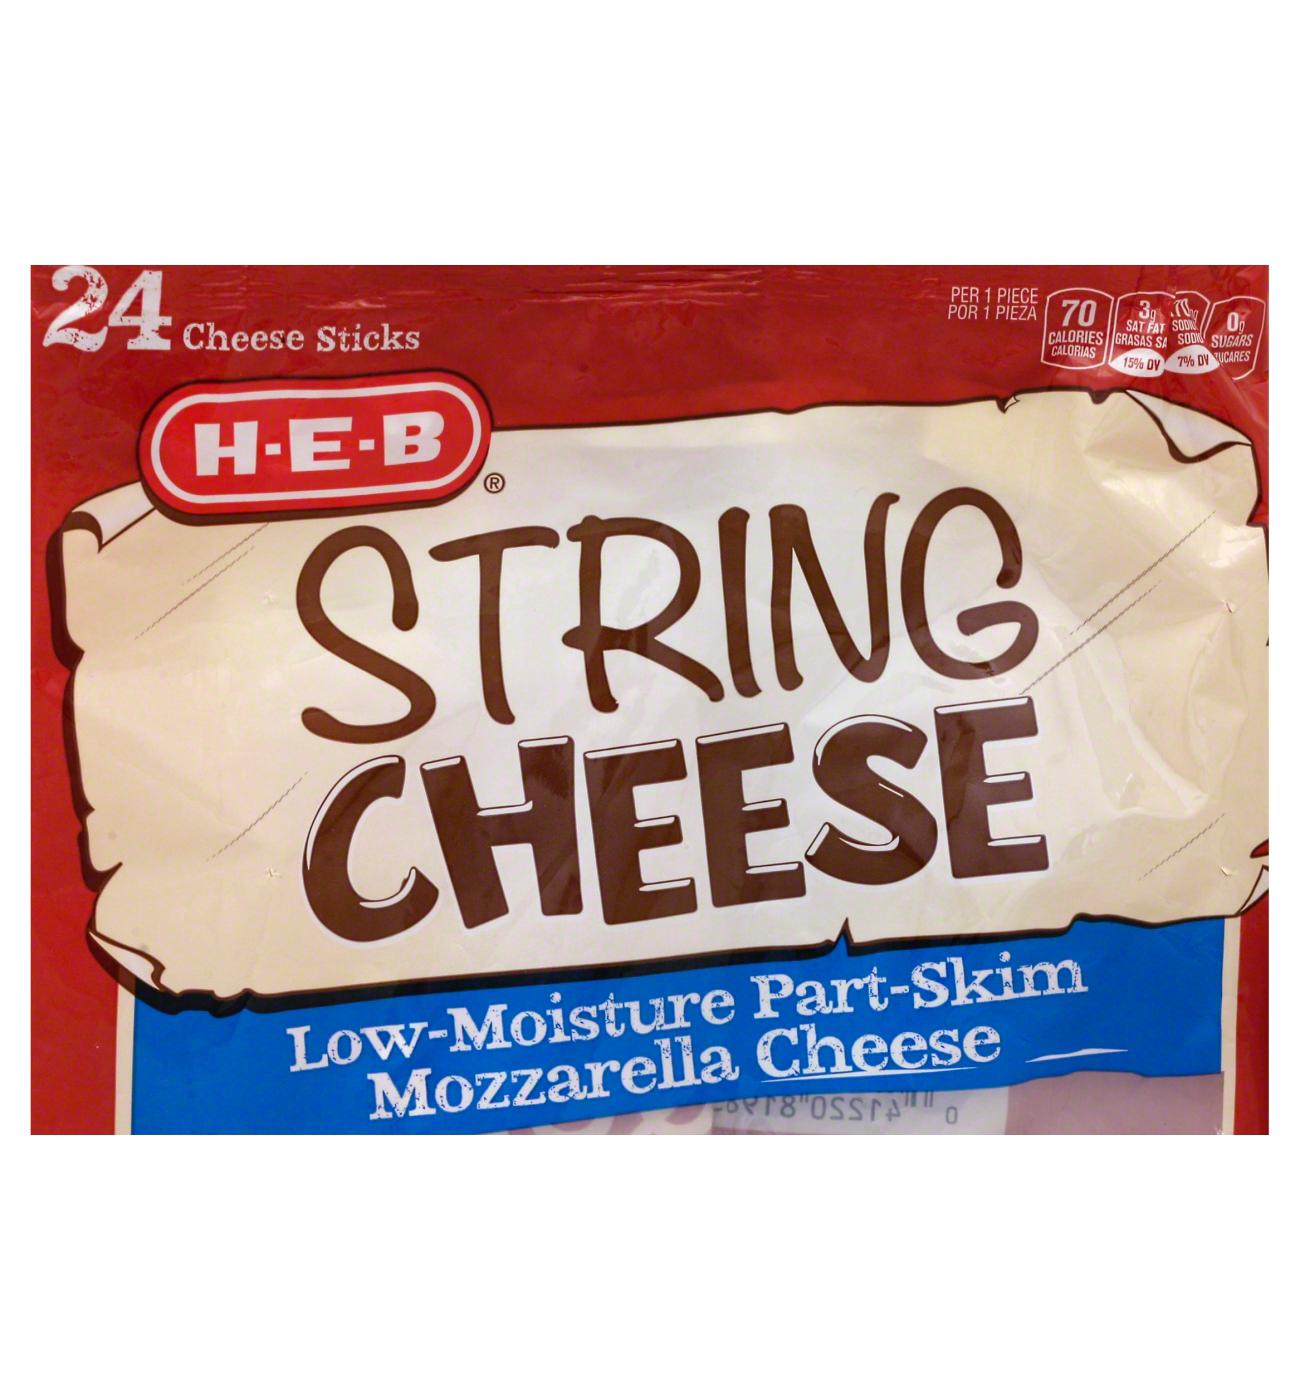 H-E-B Low Moisture Part-Skim Mozzarella Cheese Sticks, 24 ct; image 2 of 2